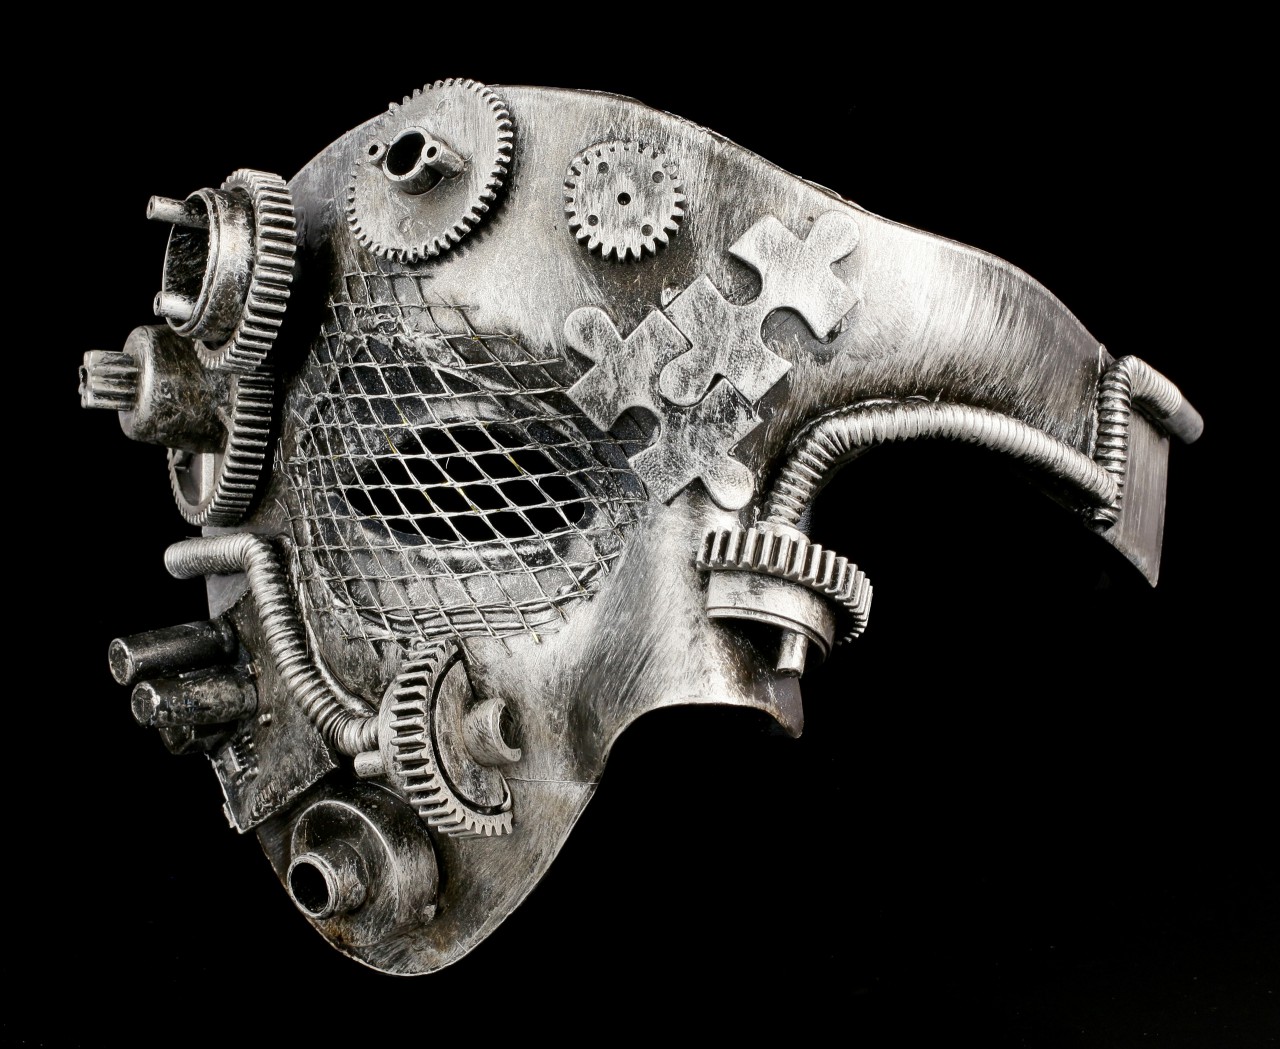 Steampunk Maske - Mechanical Phantom